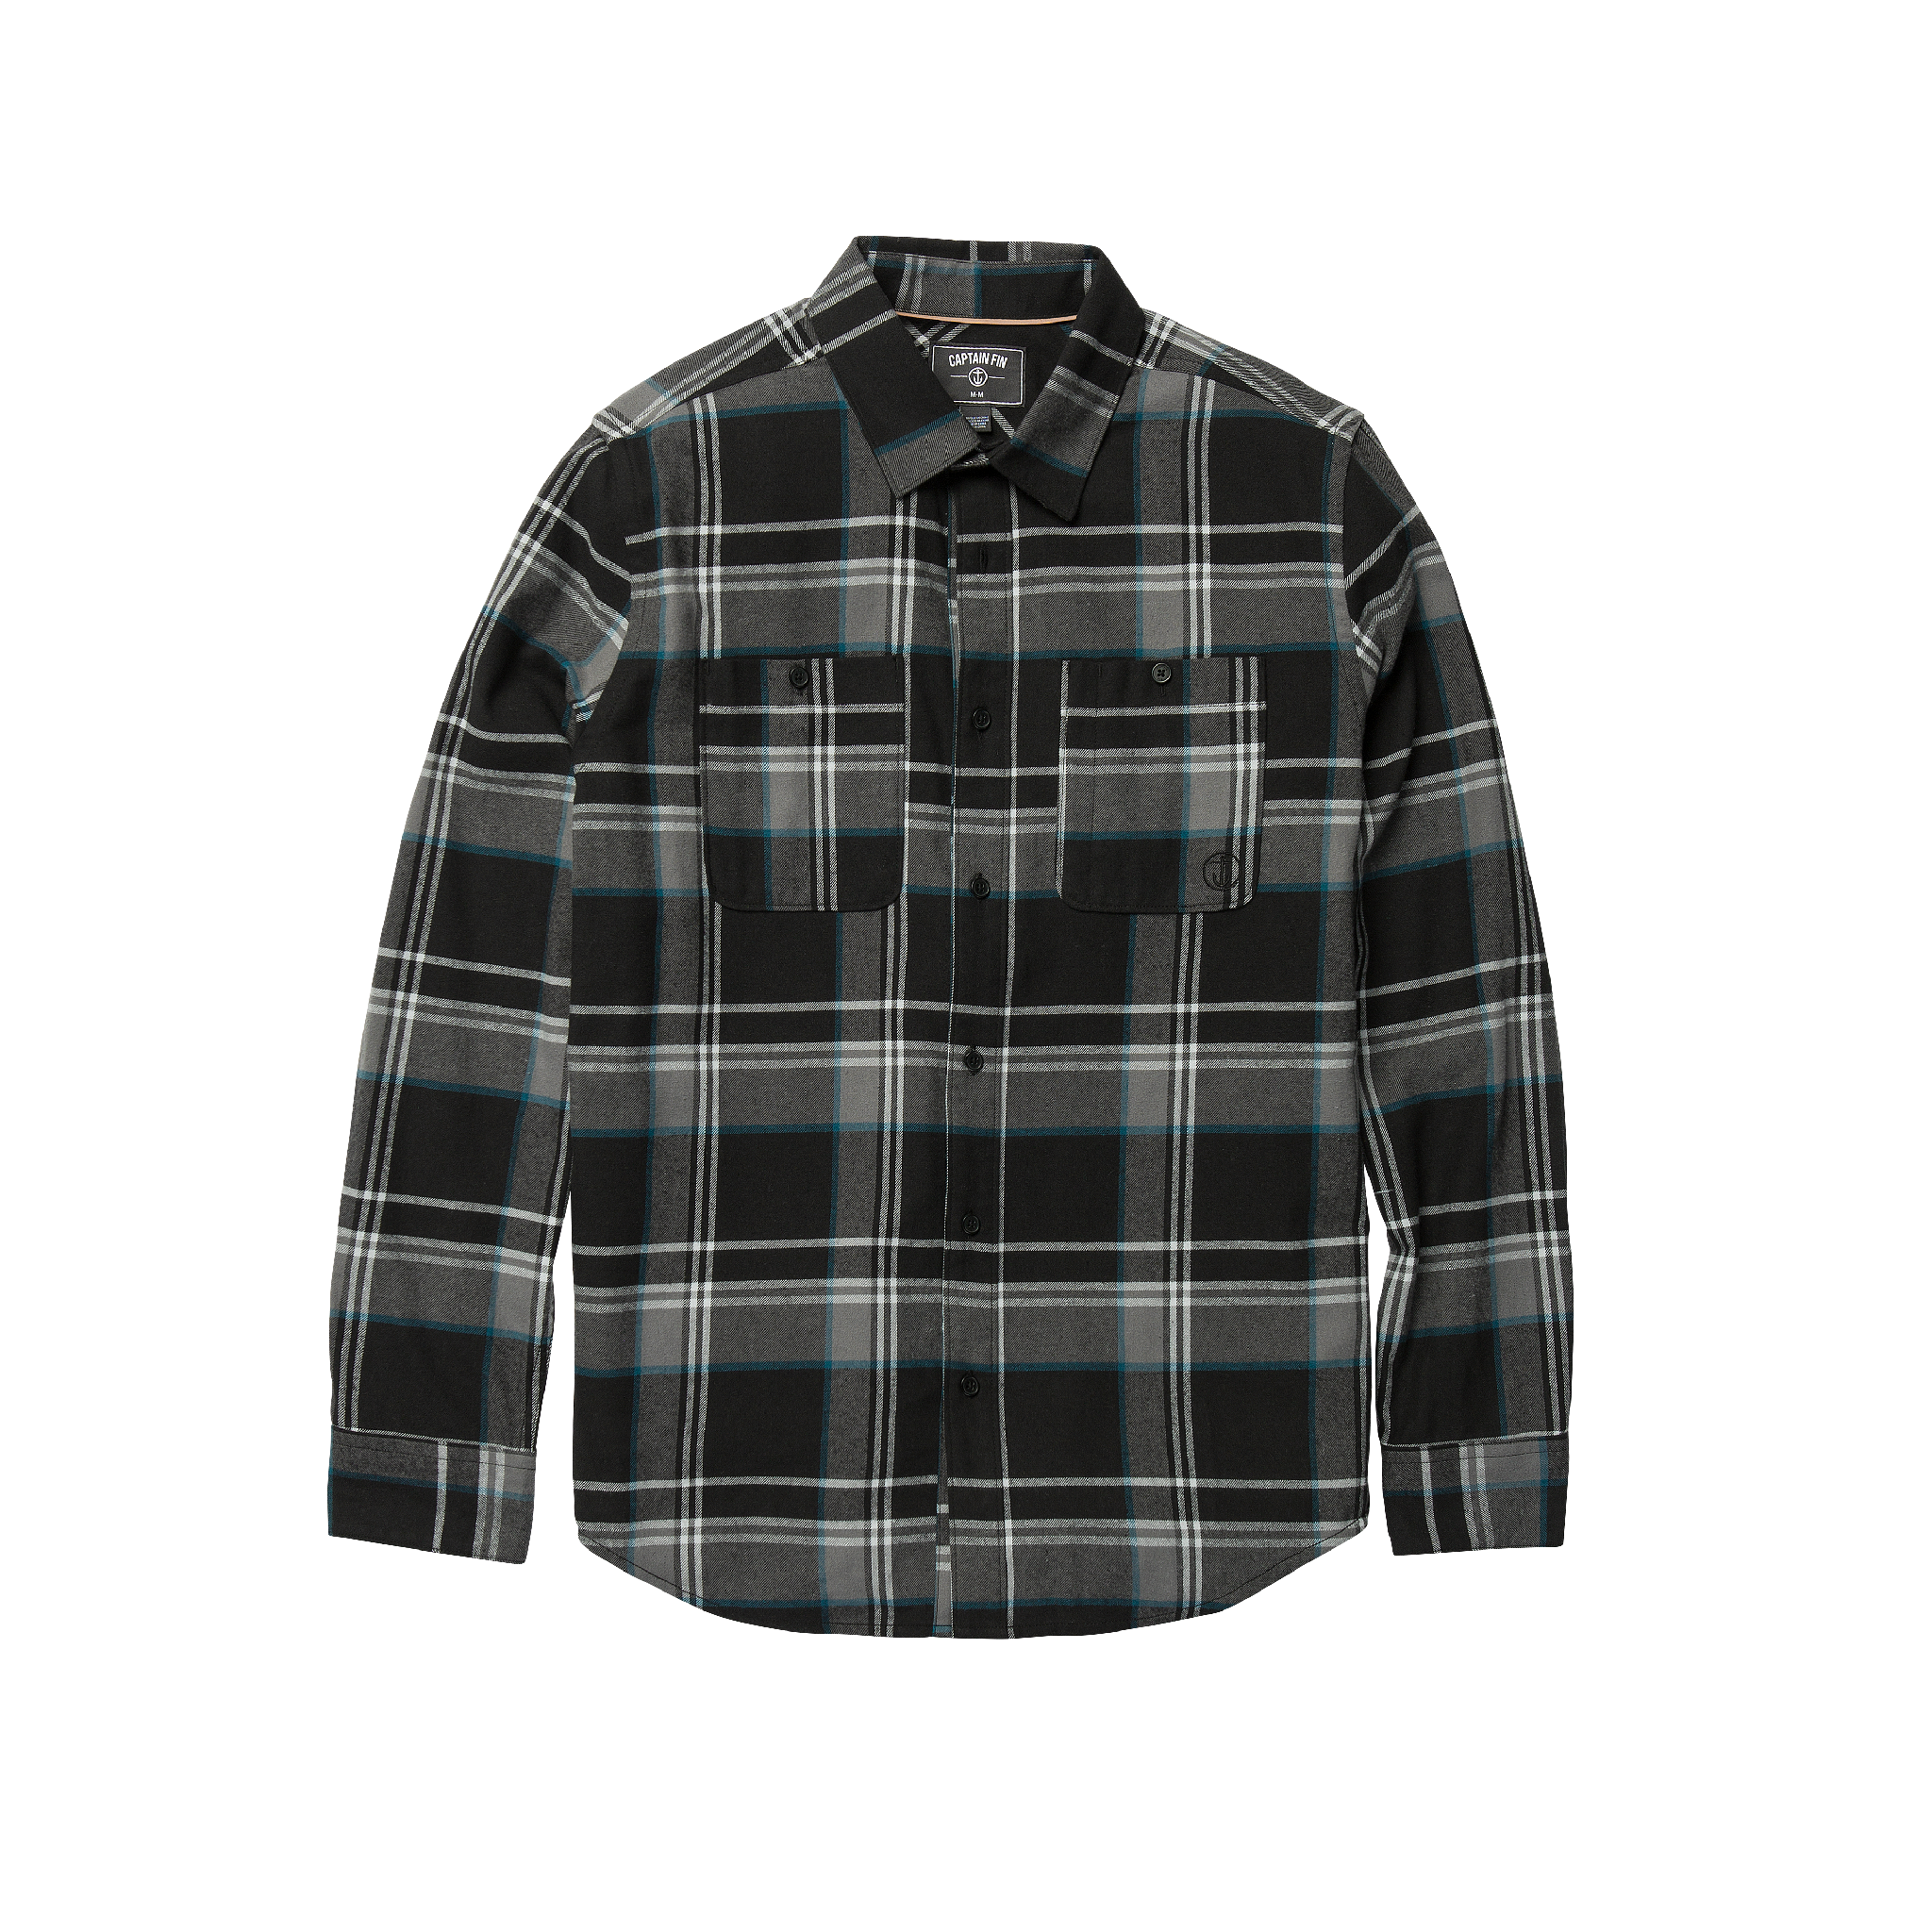 Campo Elijo Long Sleeve Flannel Shirt - Black